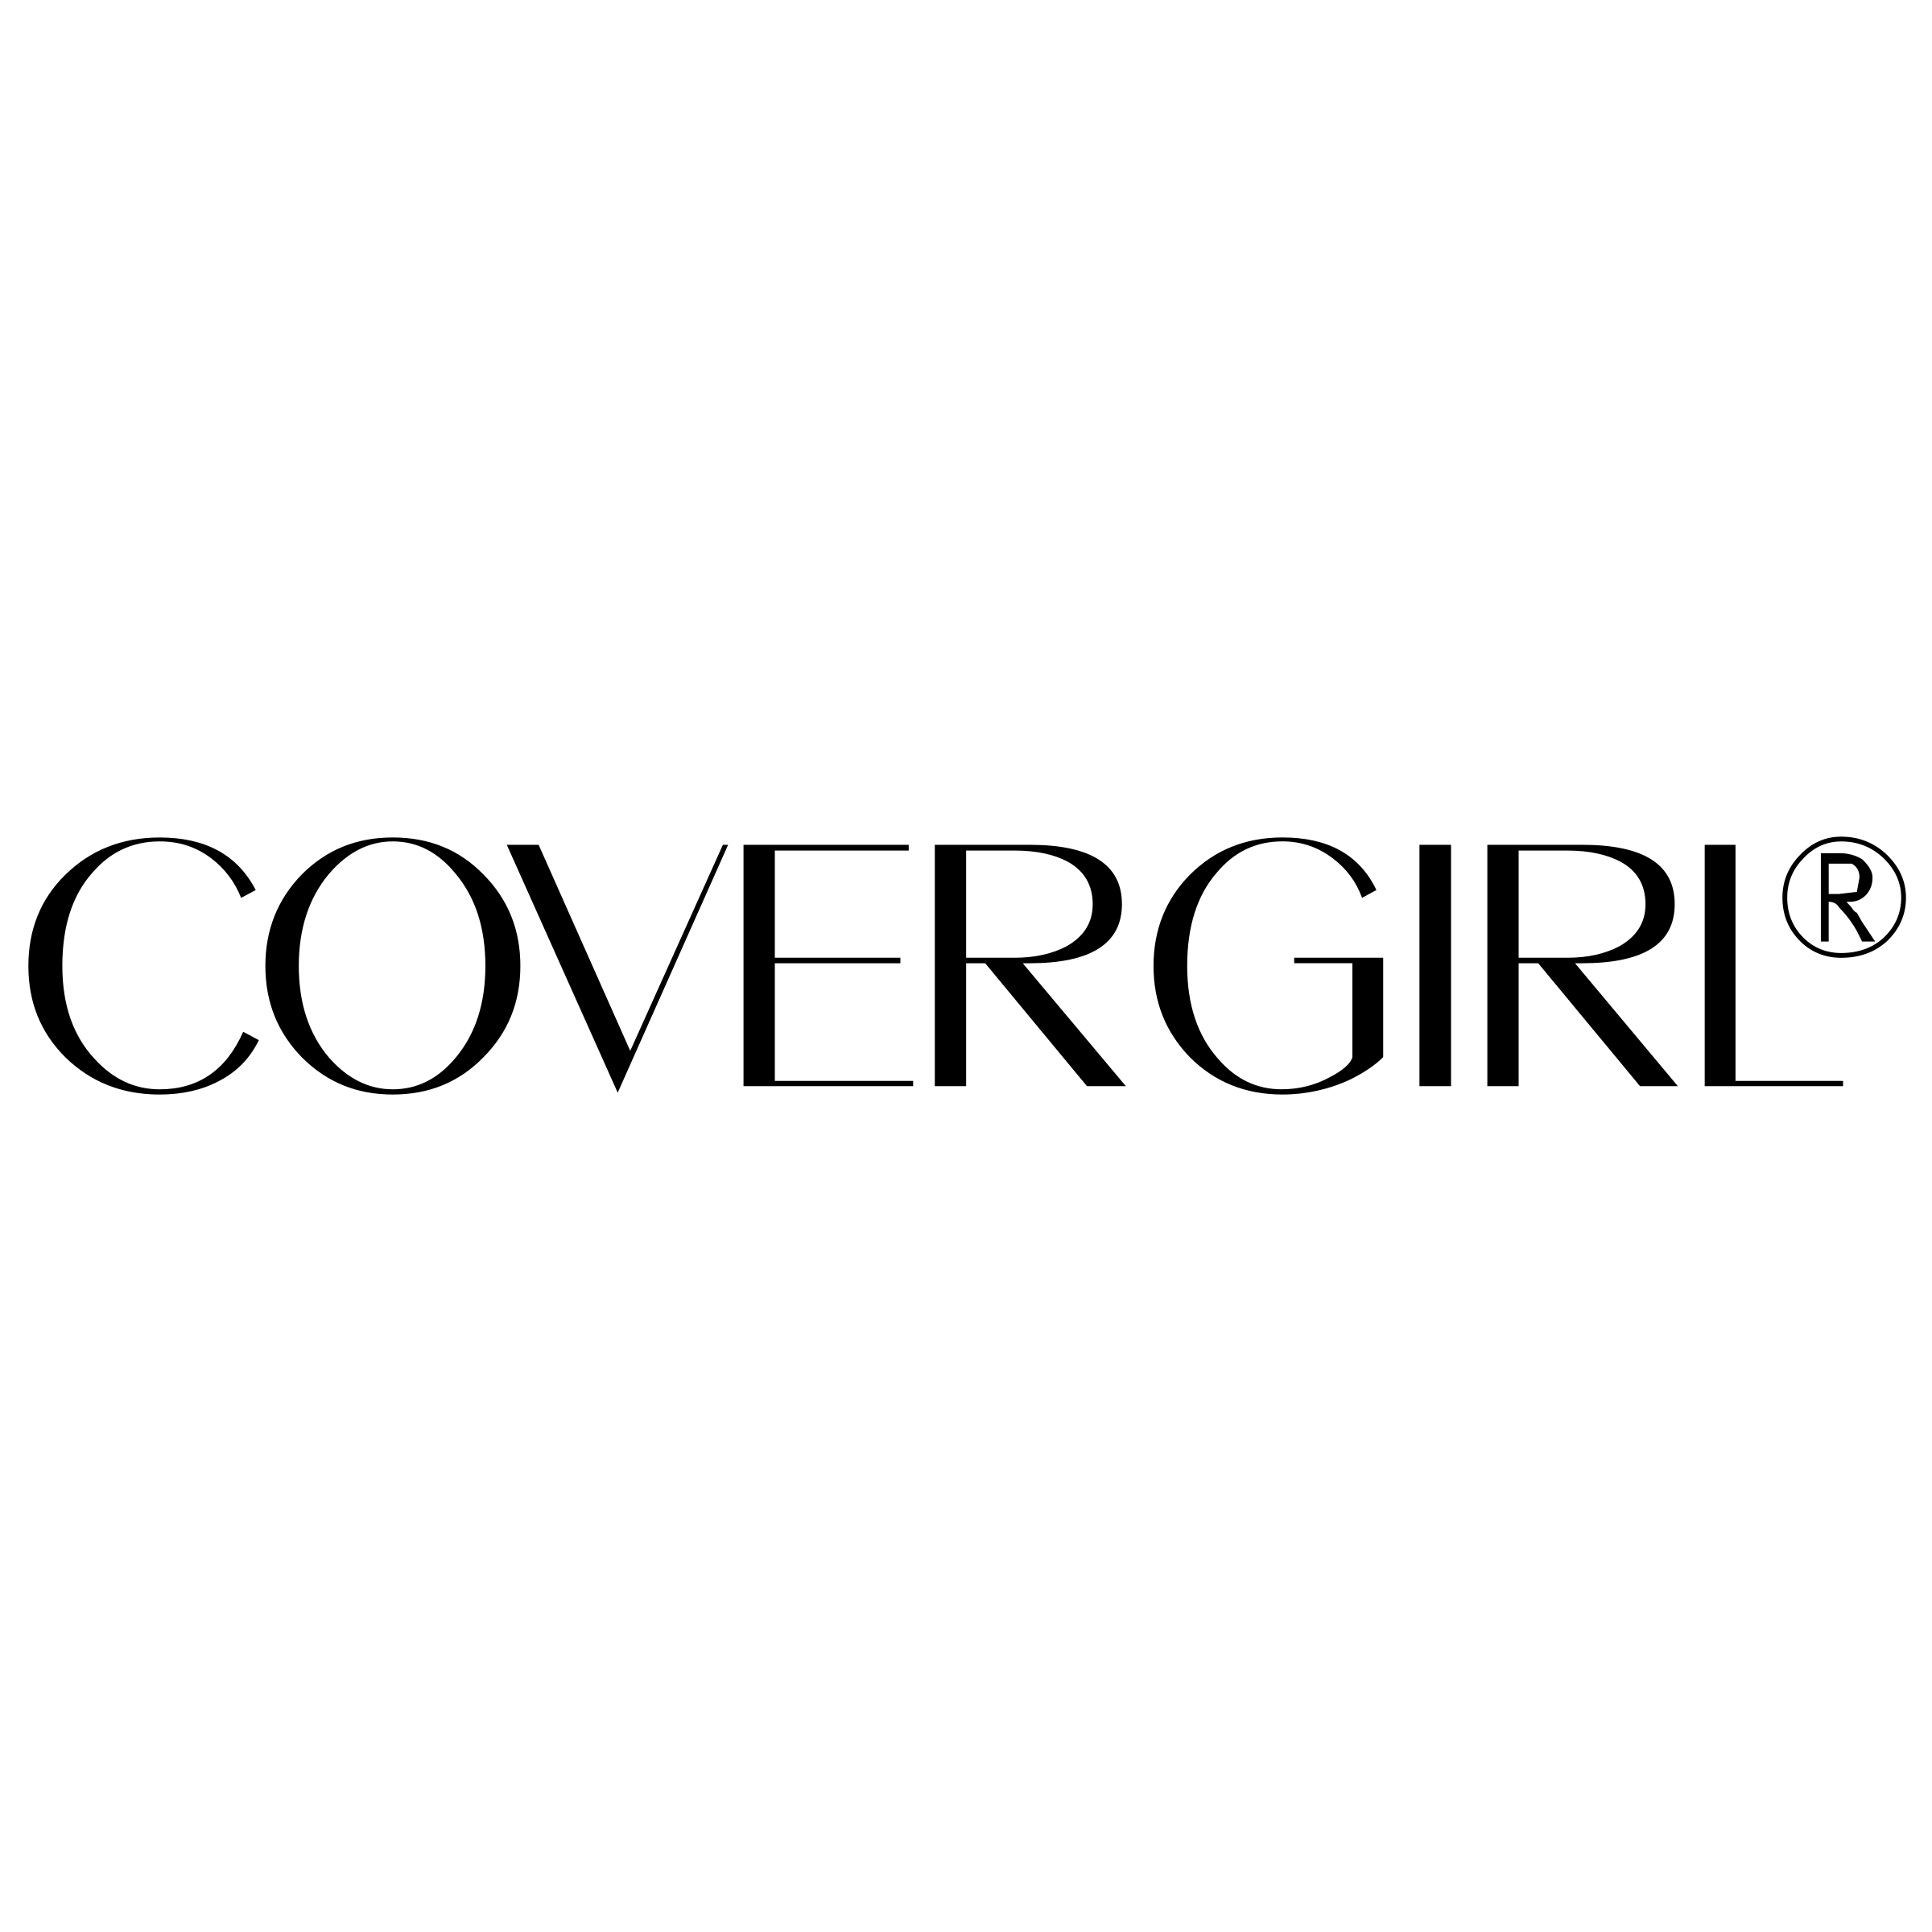 Covergilr Logo - Covergirl Logo PNG Transparent & SVG Vector - Freebie Supply